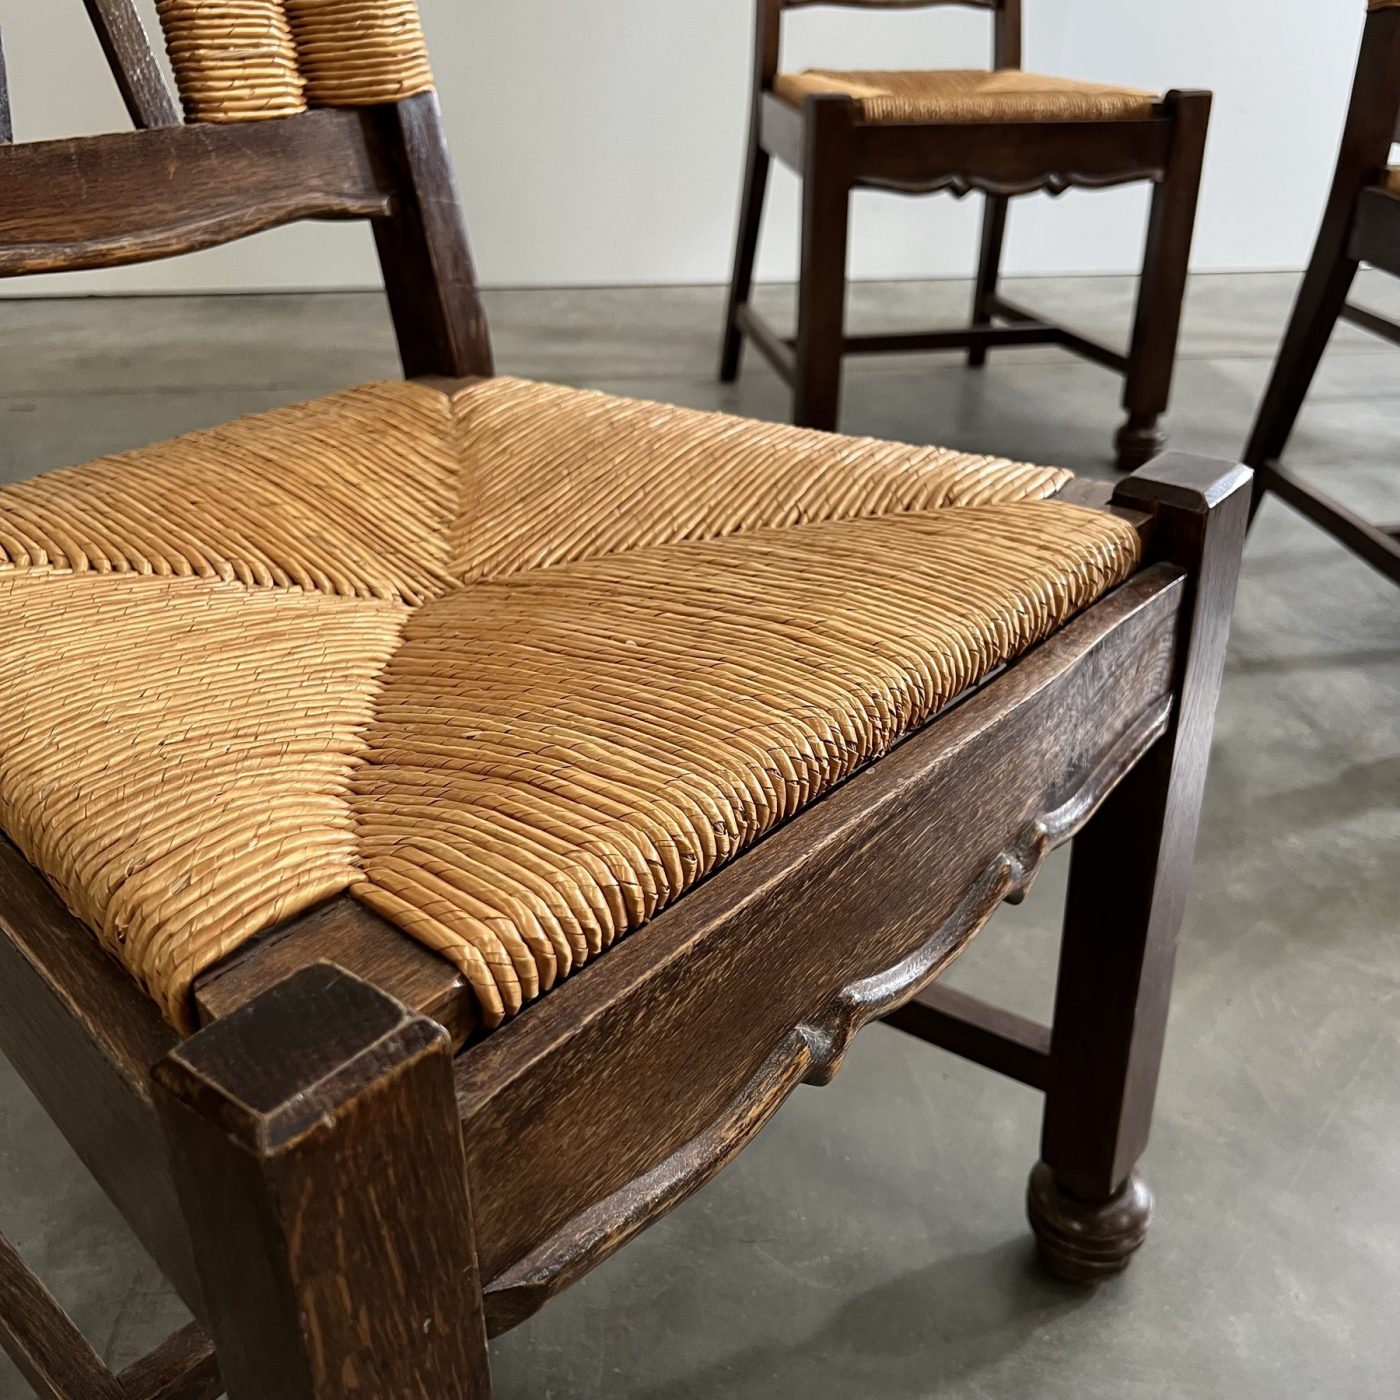 objet-vagabond-oak-chairs0009